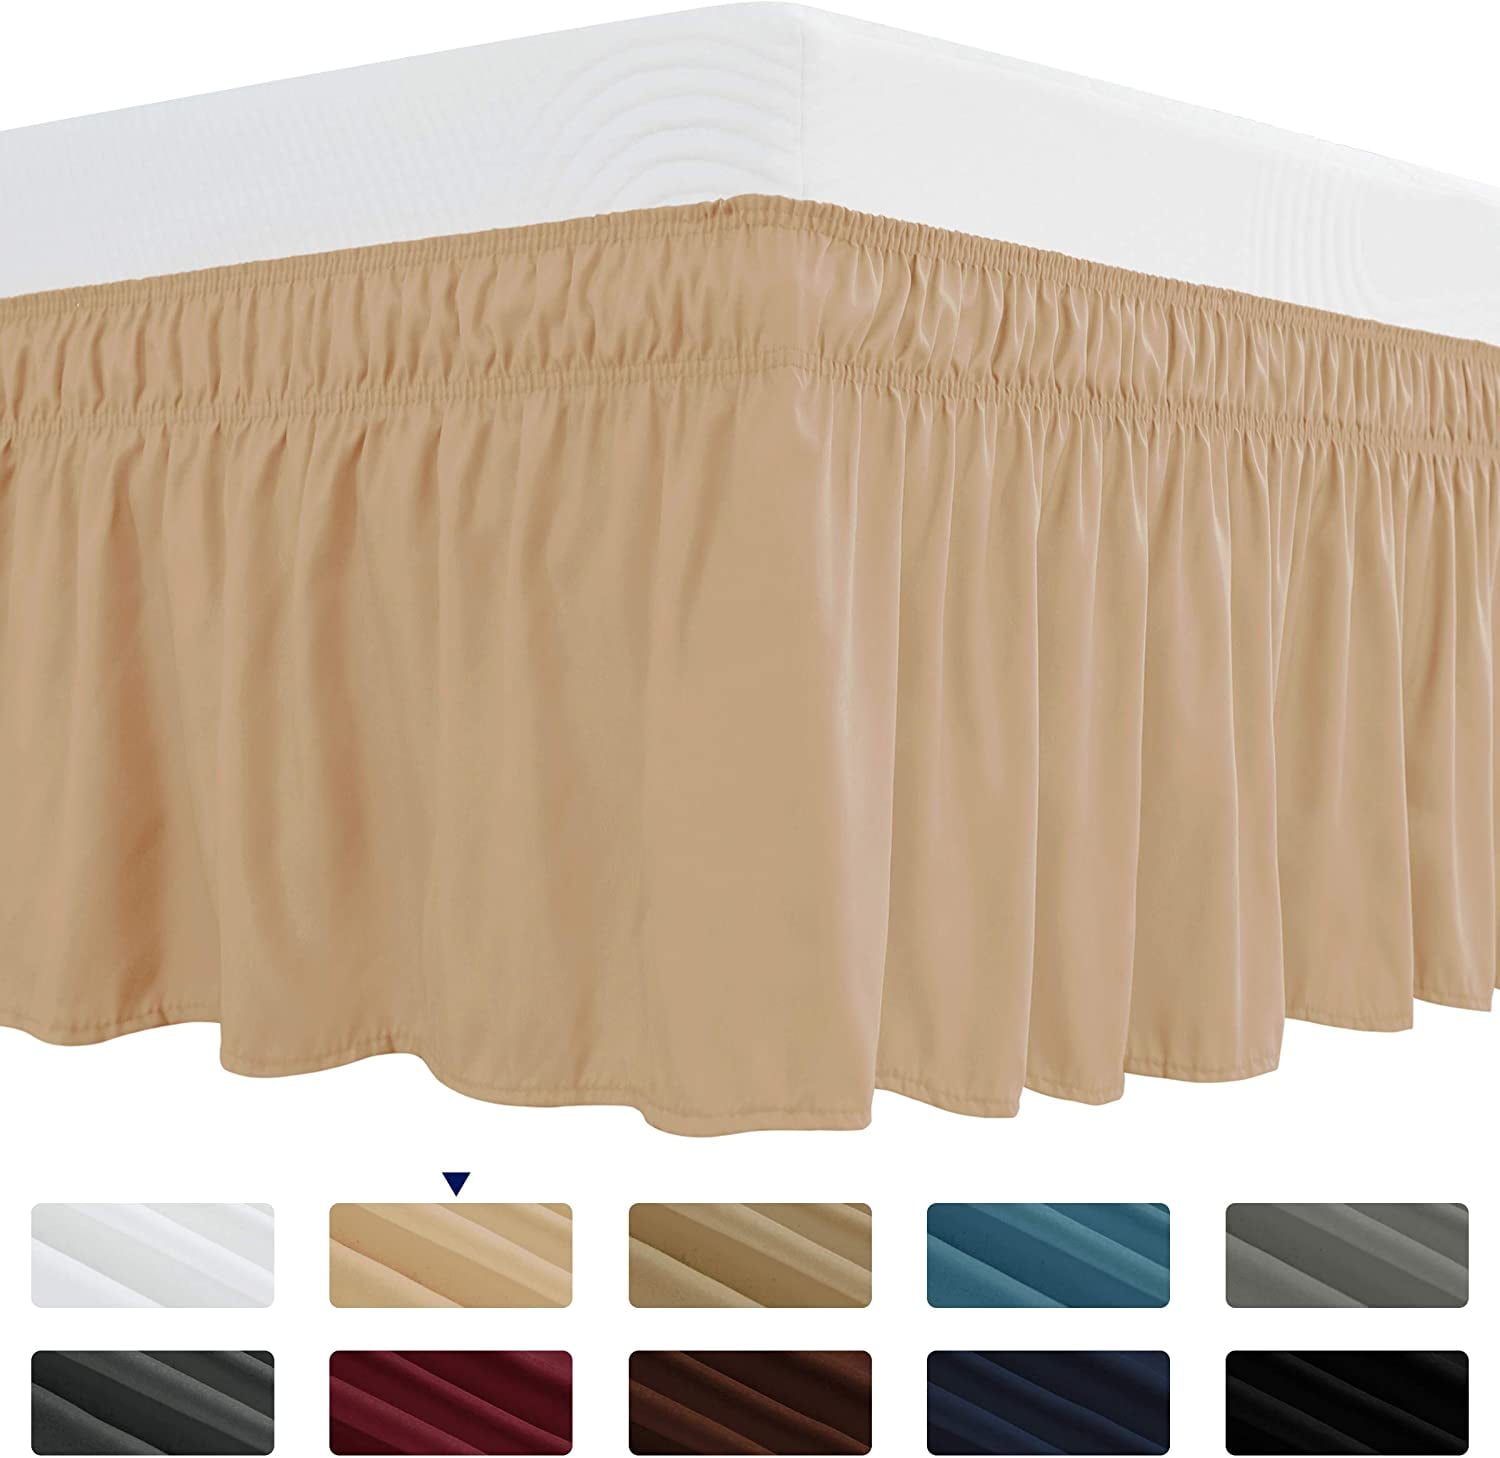 US Wrap Around Three Sides Elastic Ruffle Cotton BedSkirt/Valance Multi Colors** 